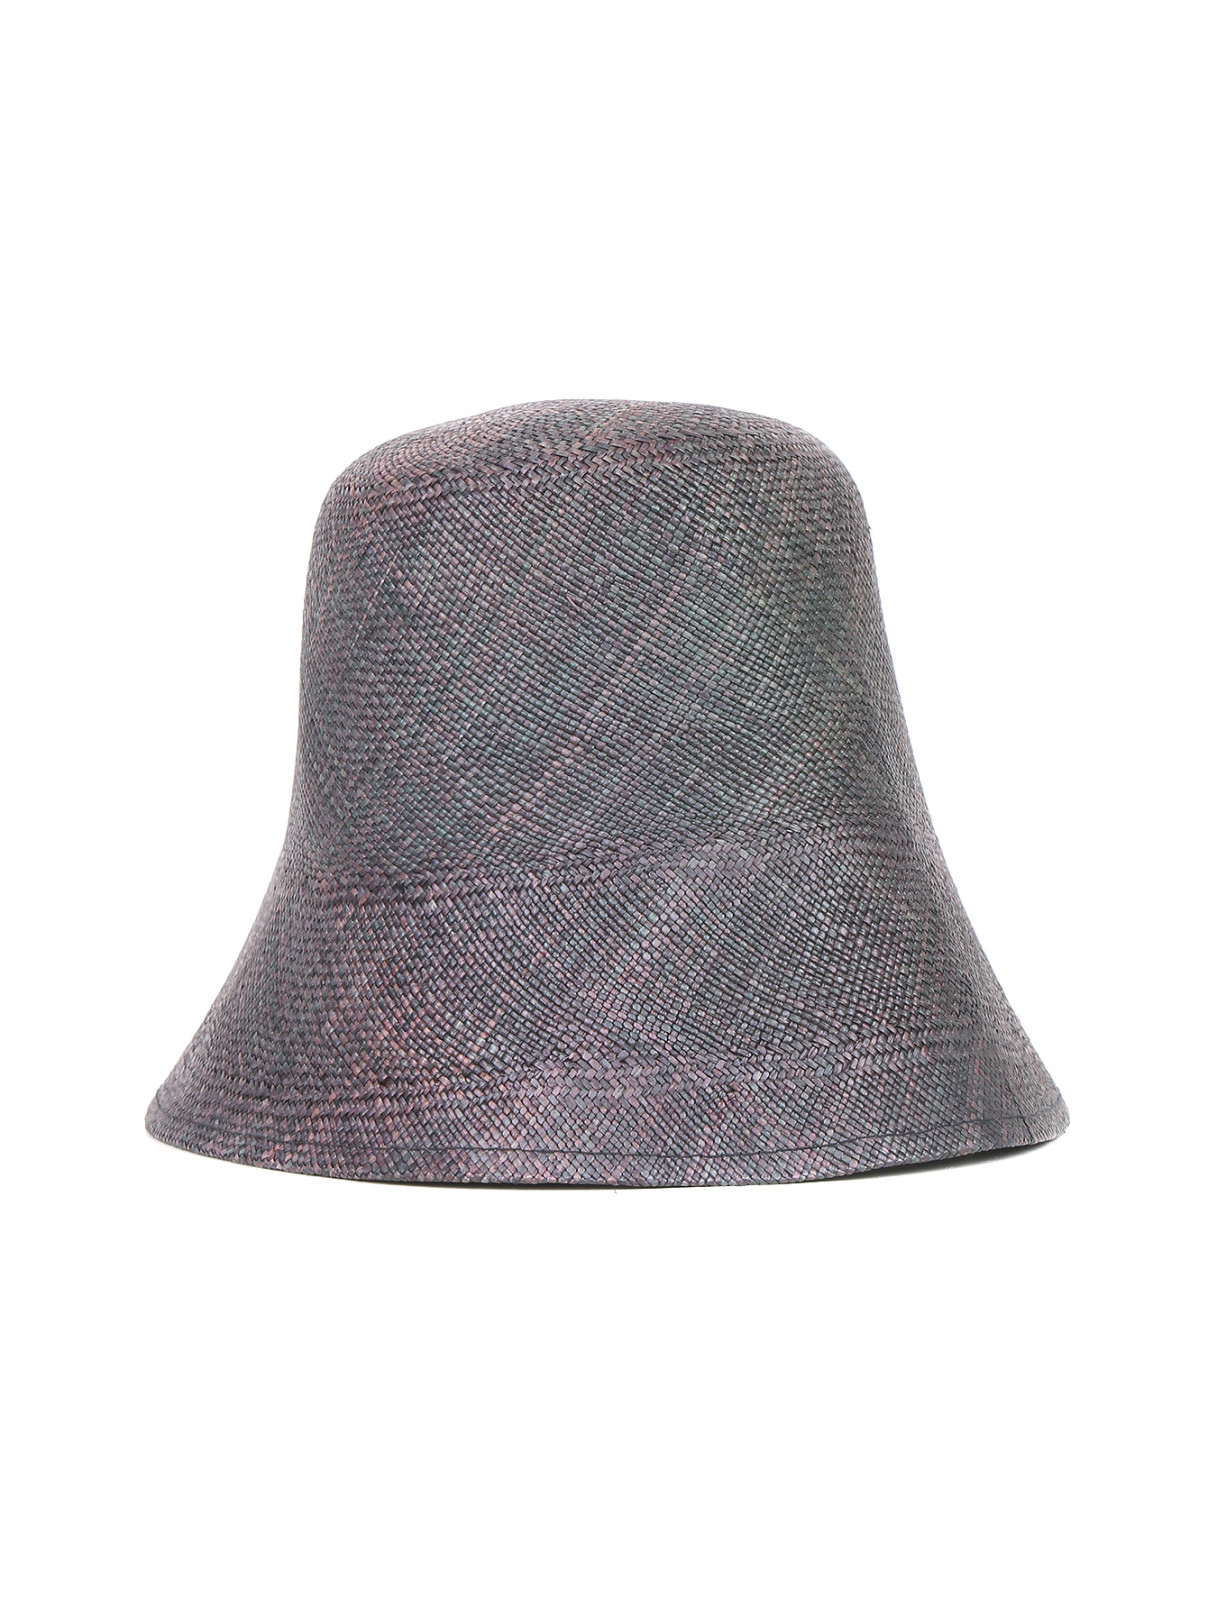 Шляпа S Max Mara  –  Общий вид